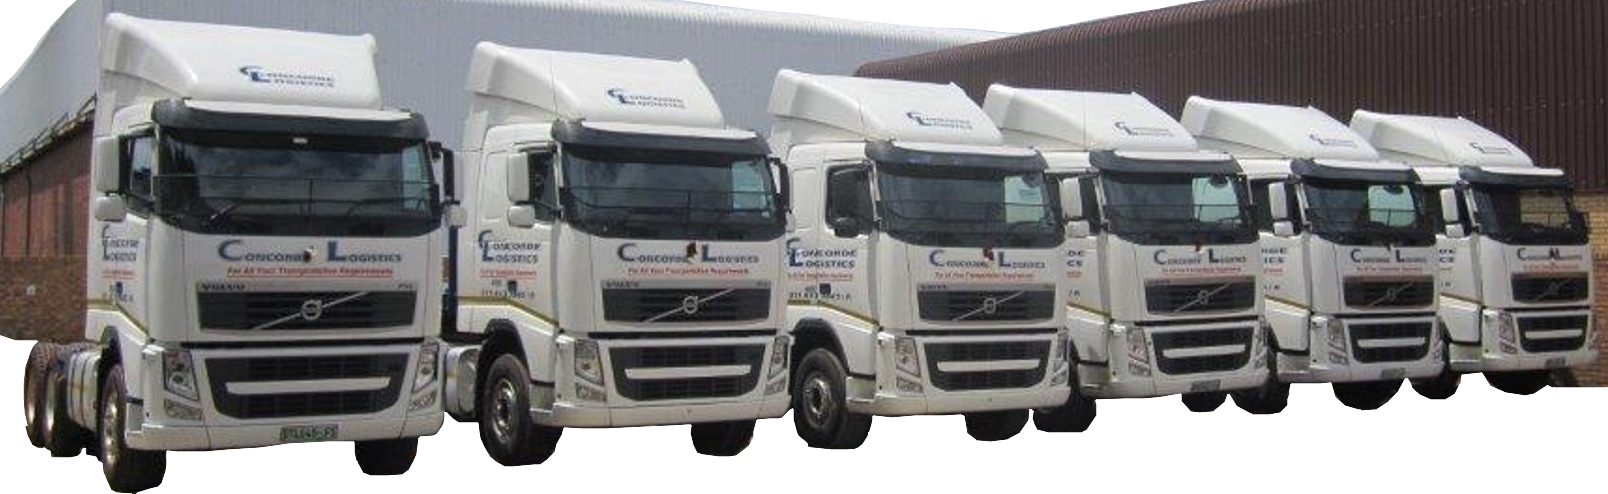 Concorde Logistics truck fleet